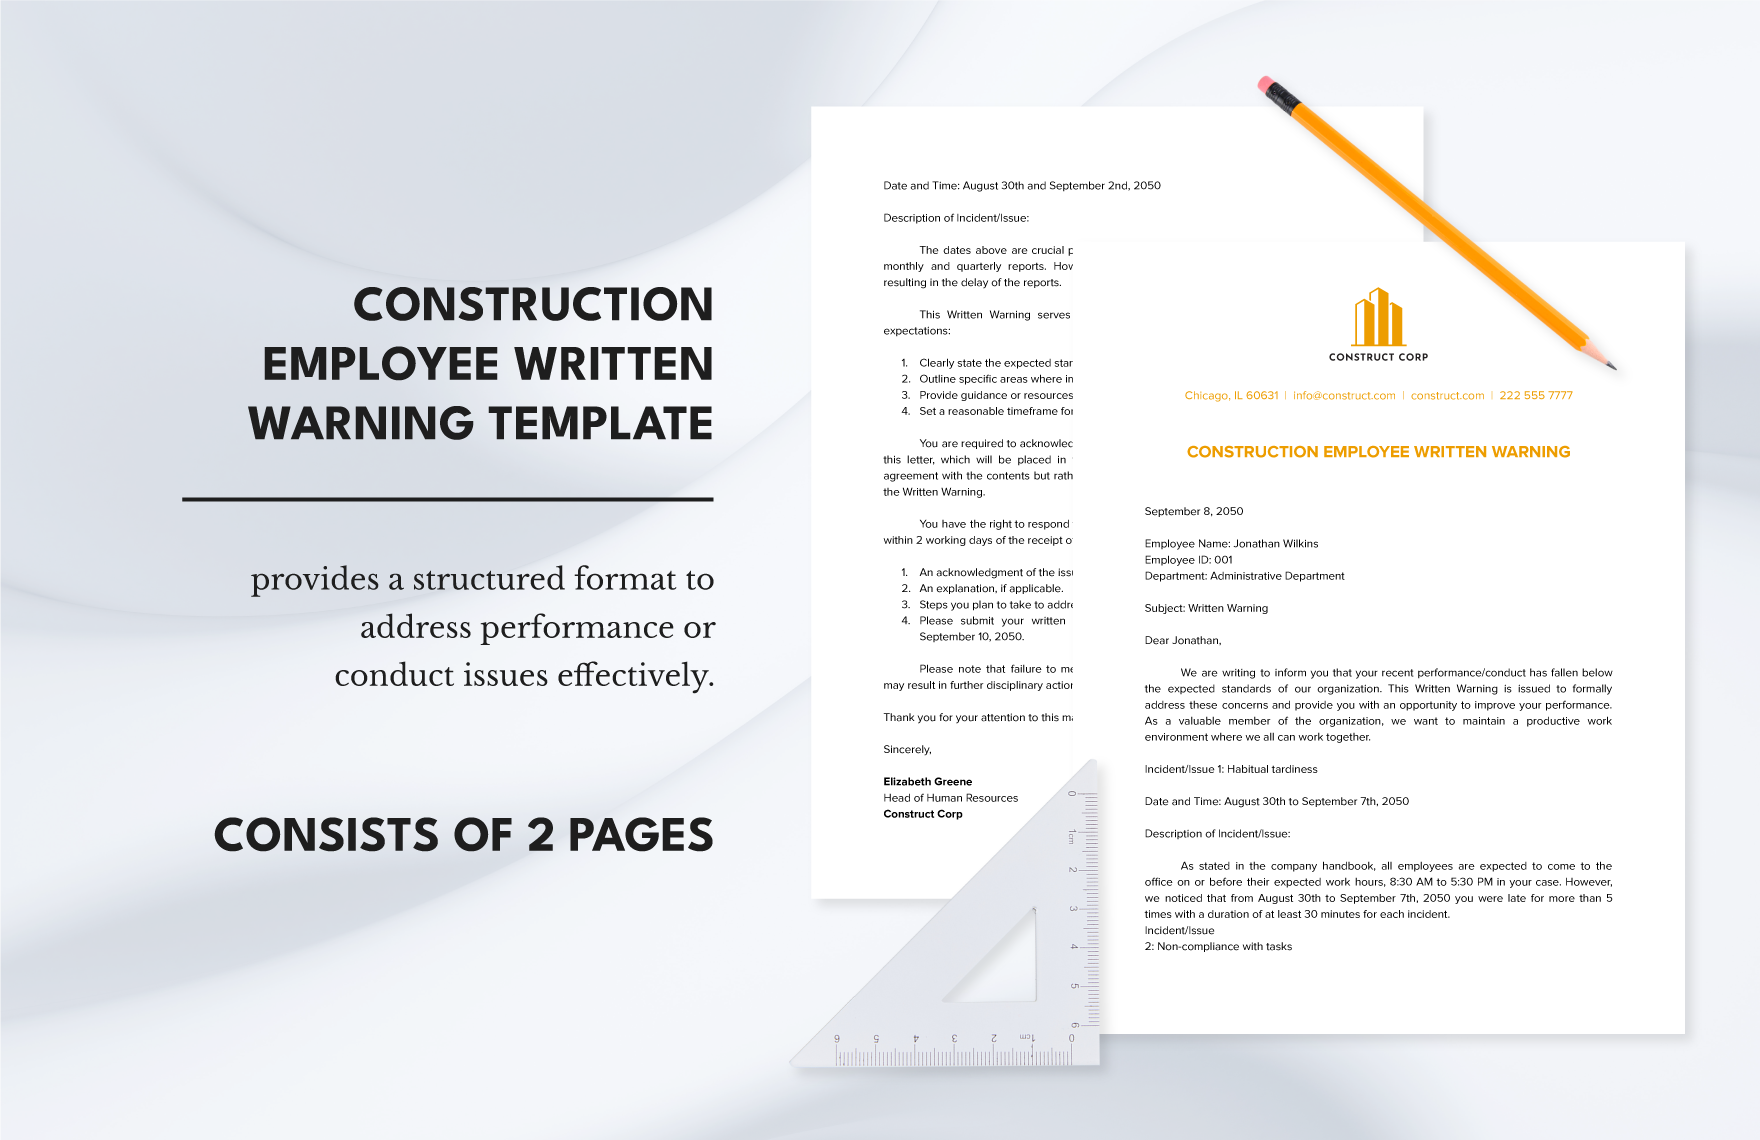 Construction Employee Disciplinary Action Template